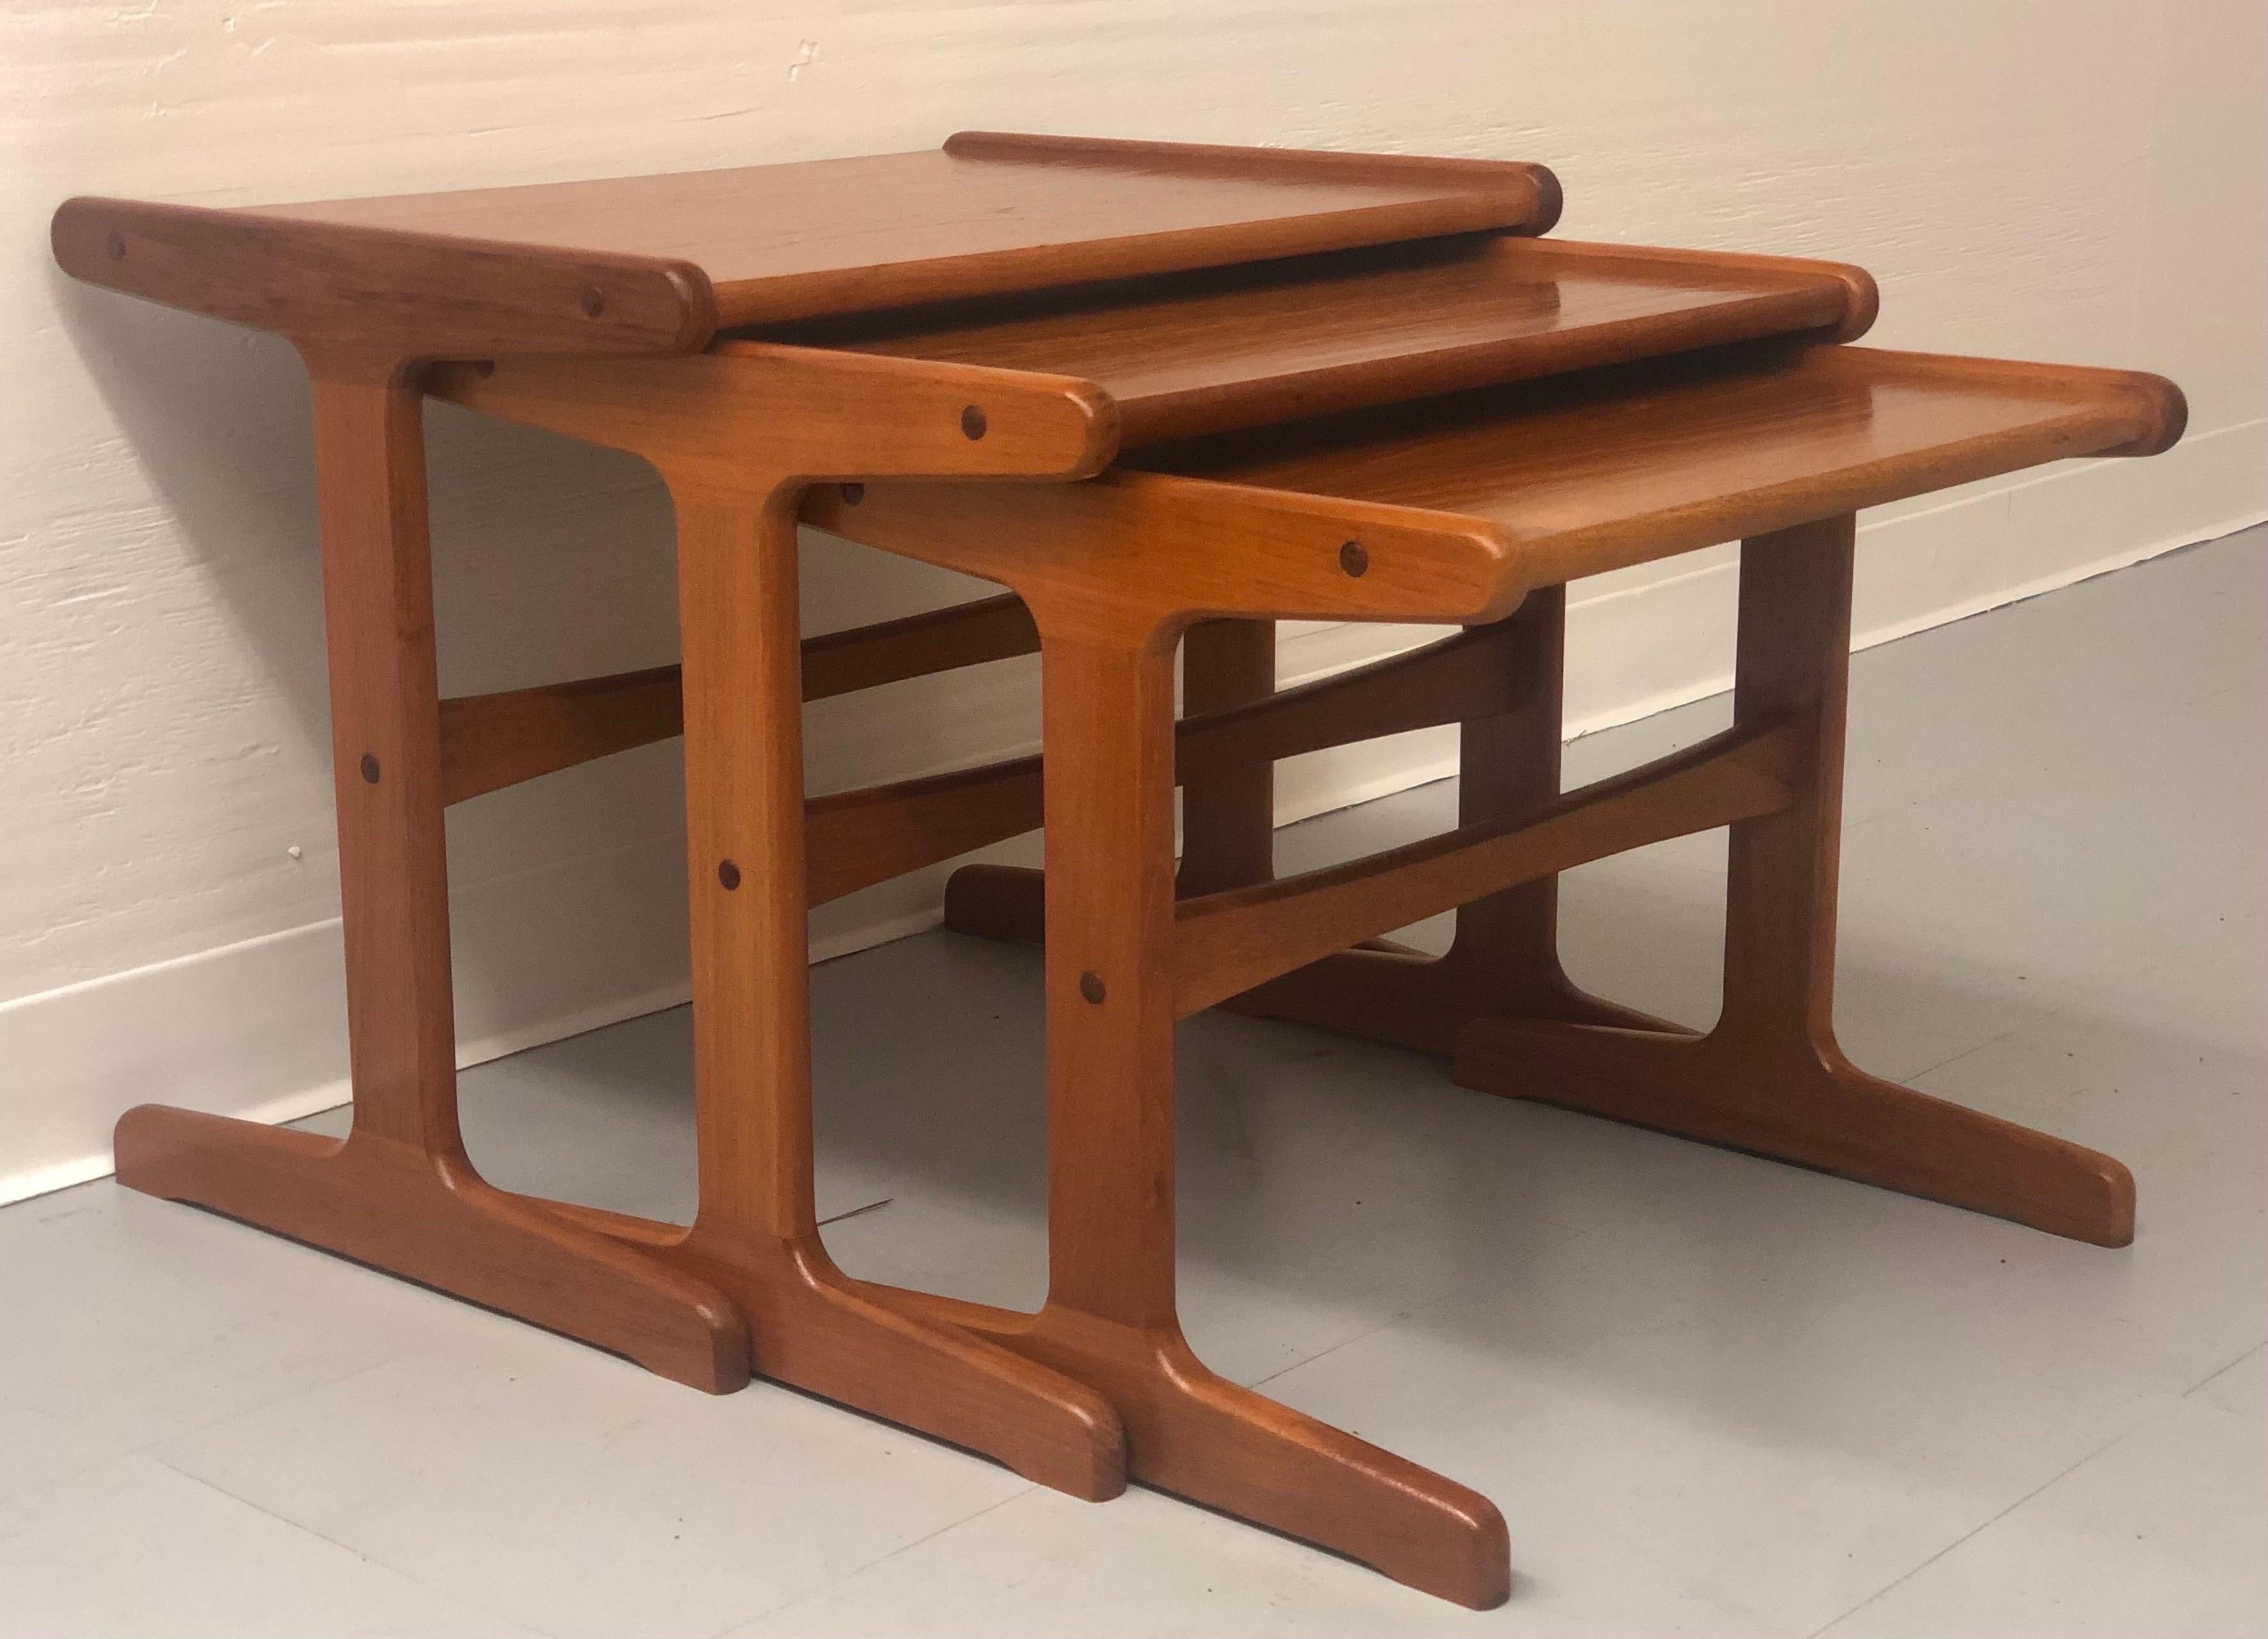 Vintage Danish modern teak nesting tables.

Dimensions: 25 W; 19 H; 17 D.